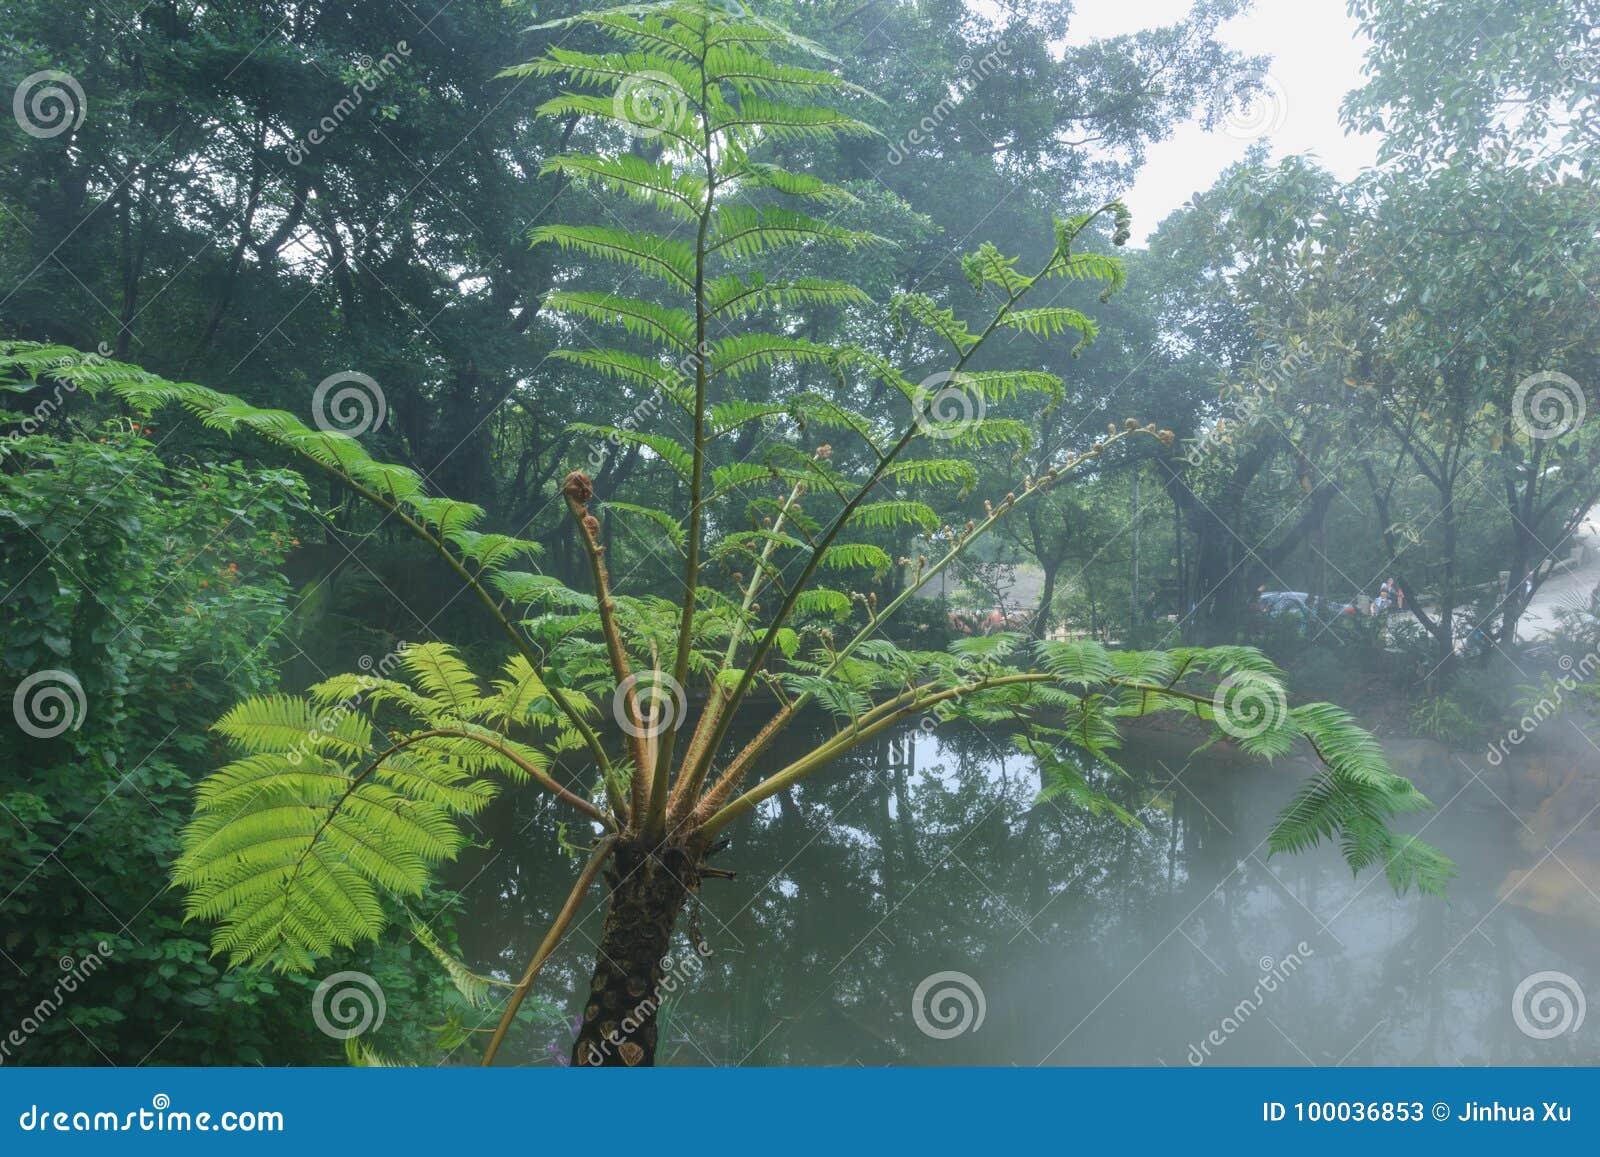 cyatheales, tree fern